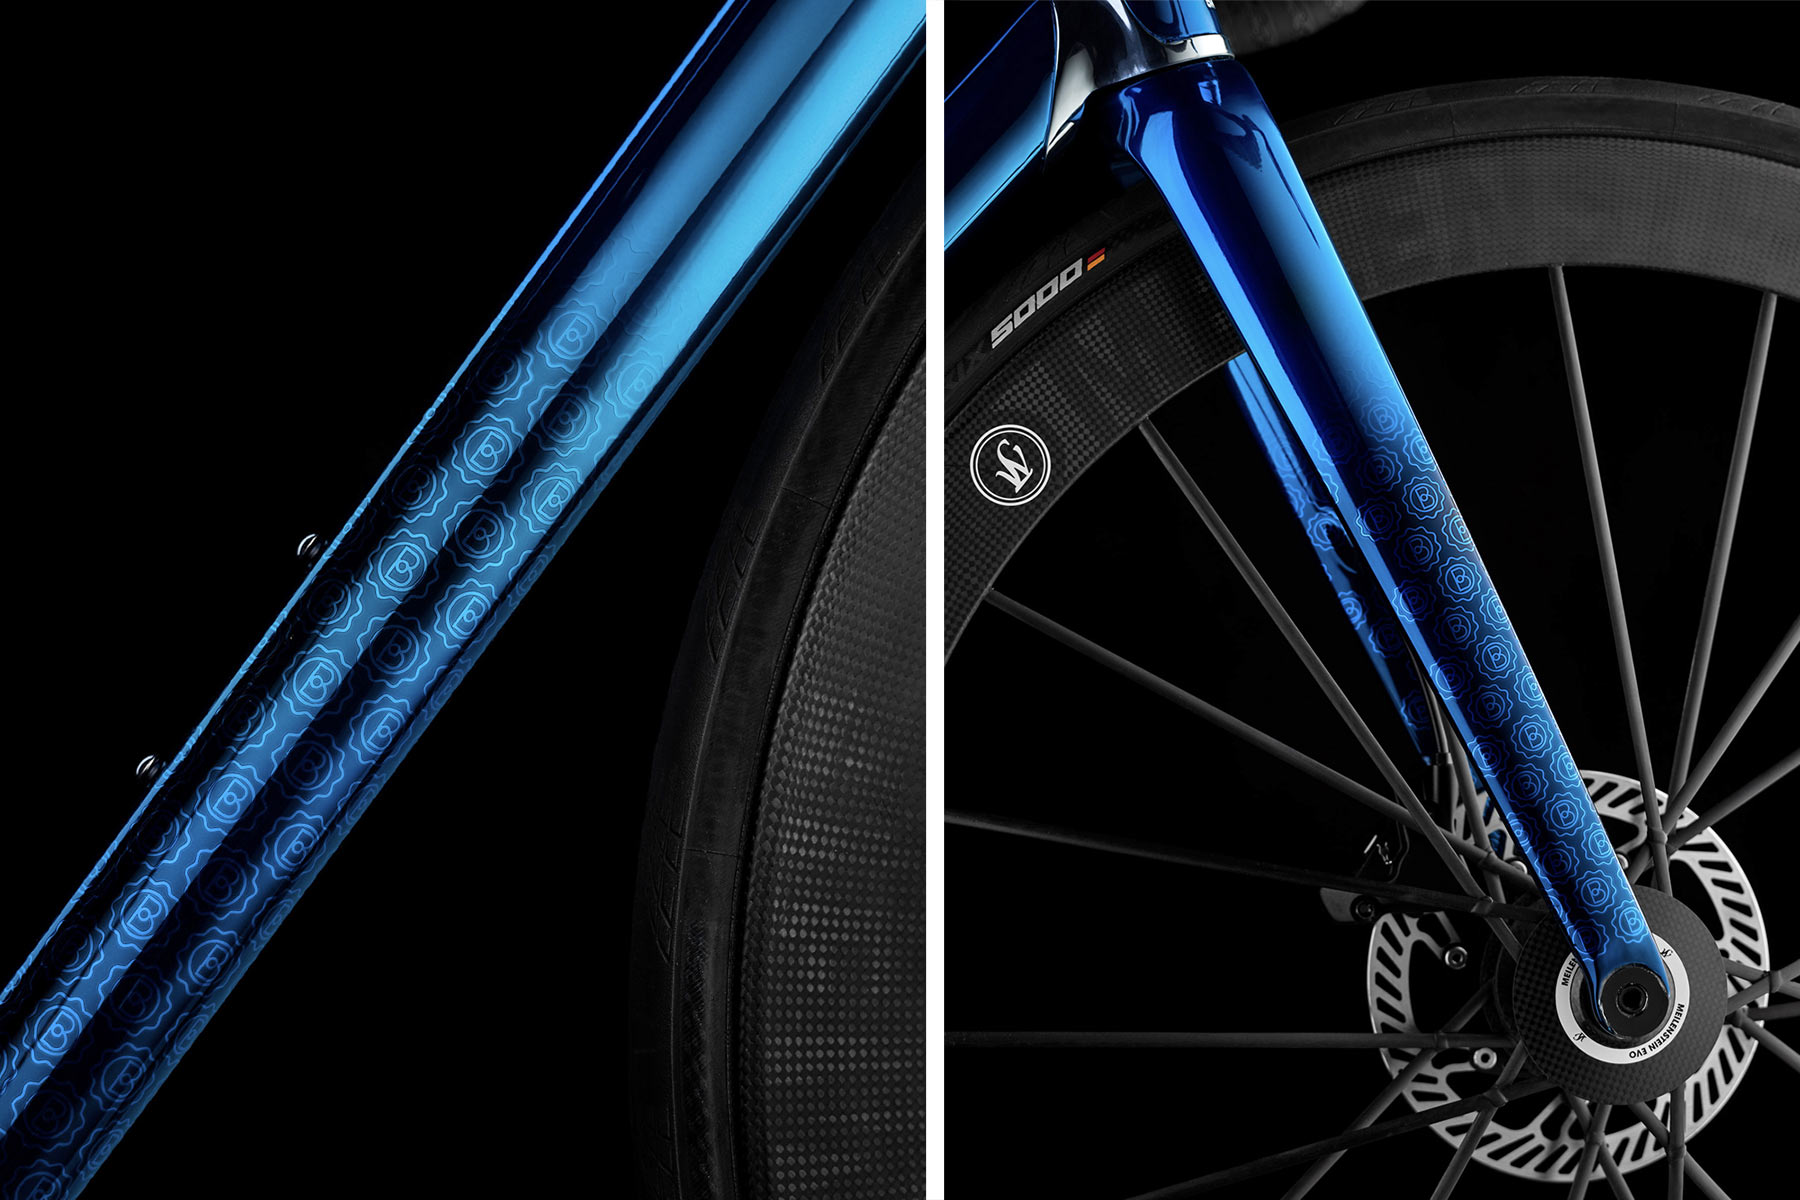 Battaglin Portofino R, custom-made-in -Italy modern integrated steel lugged road bike, cromovelato blue logo fade